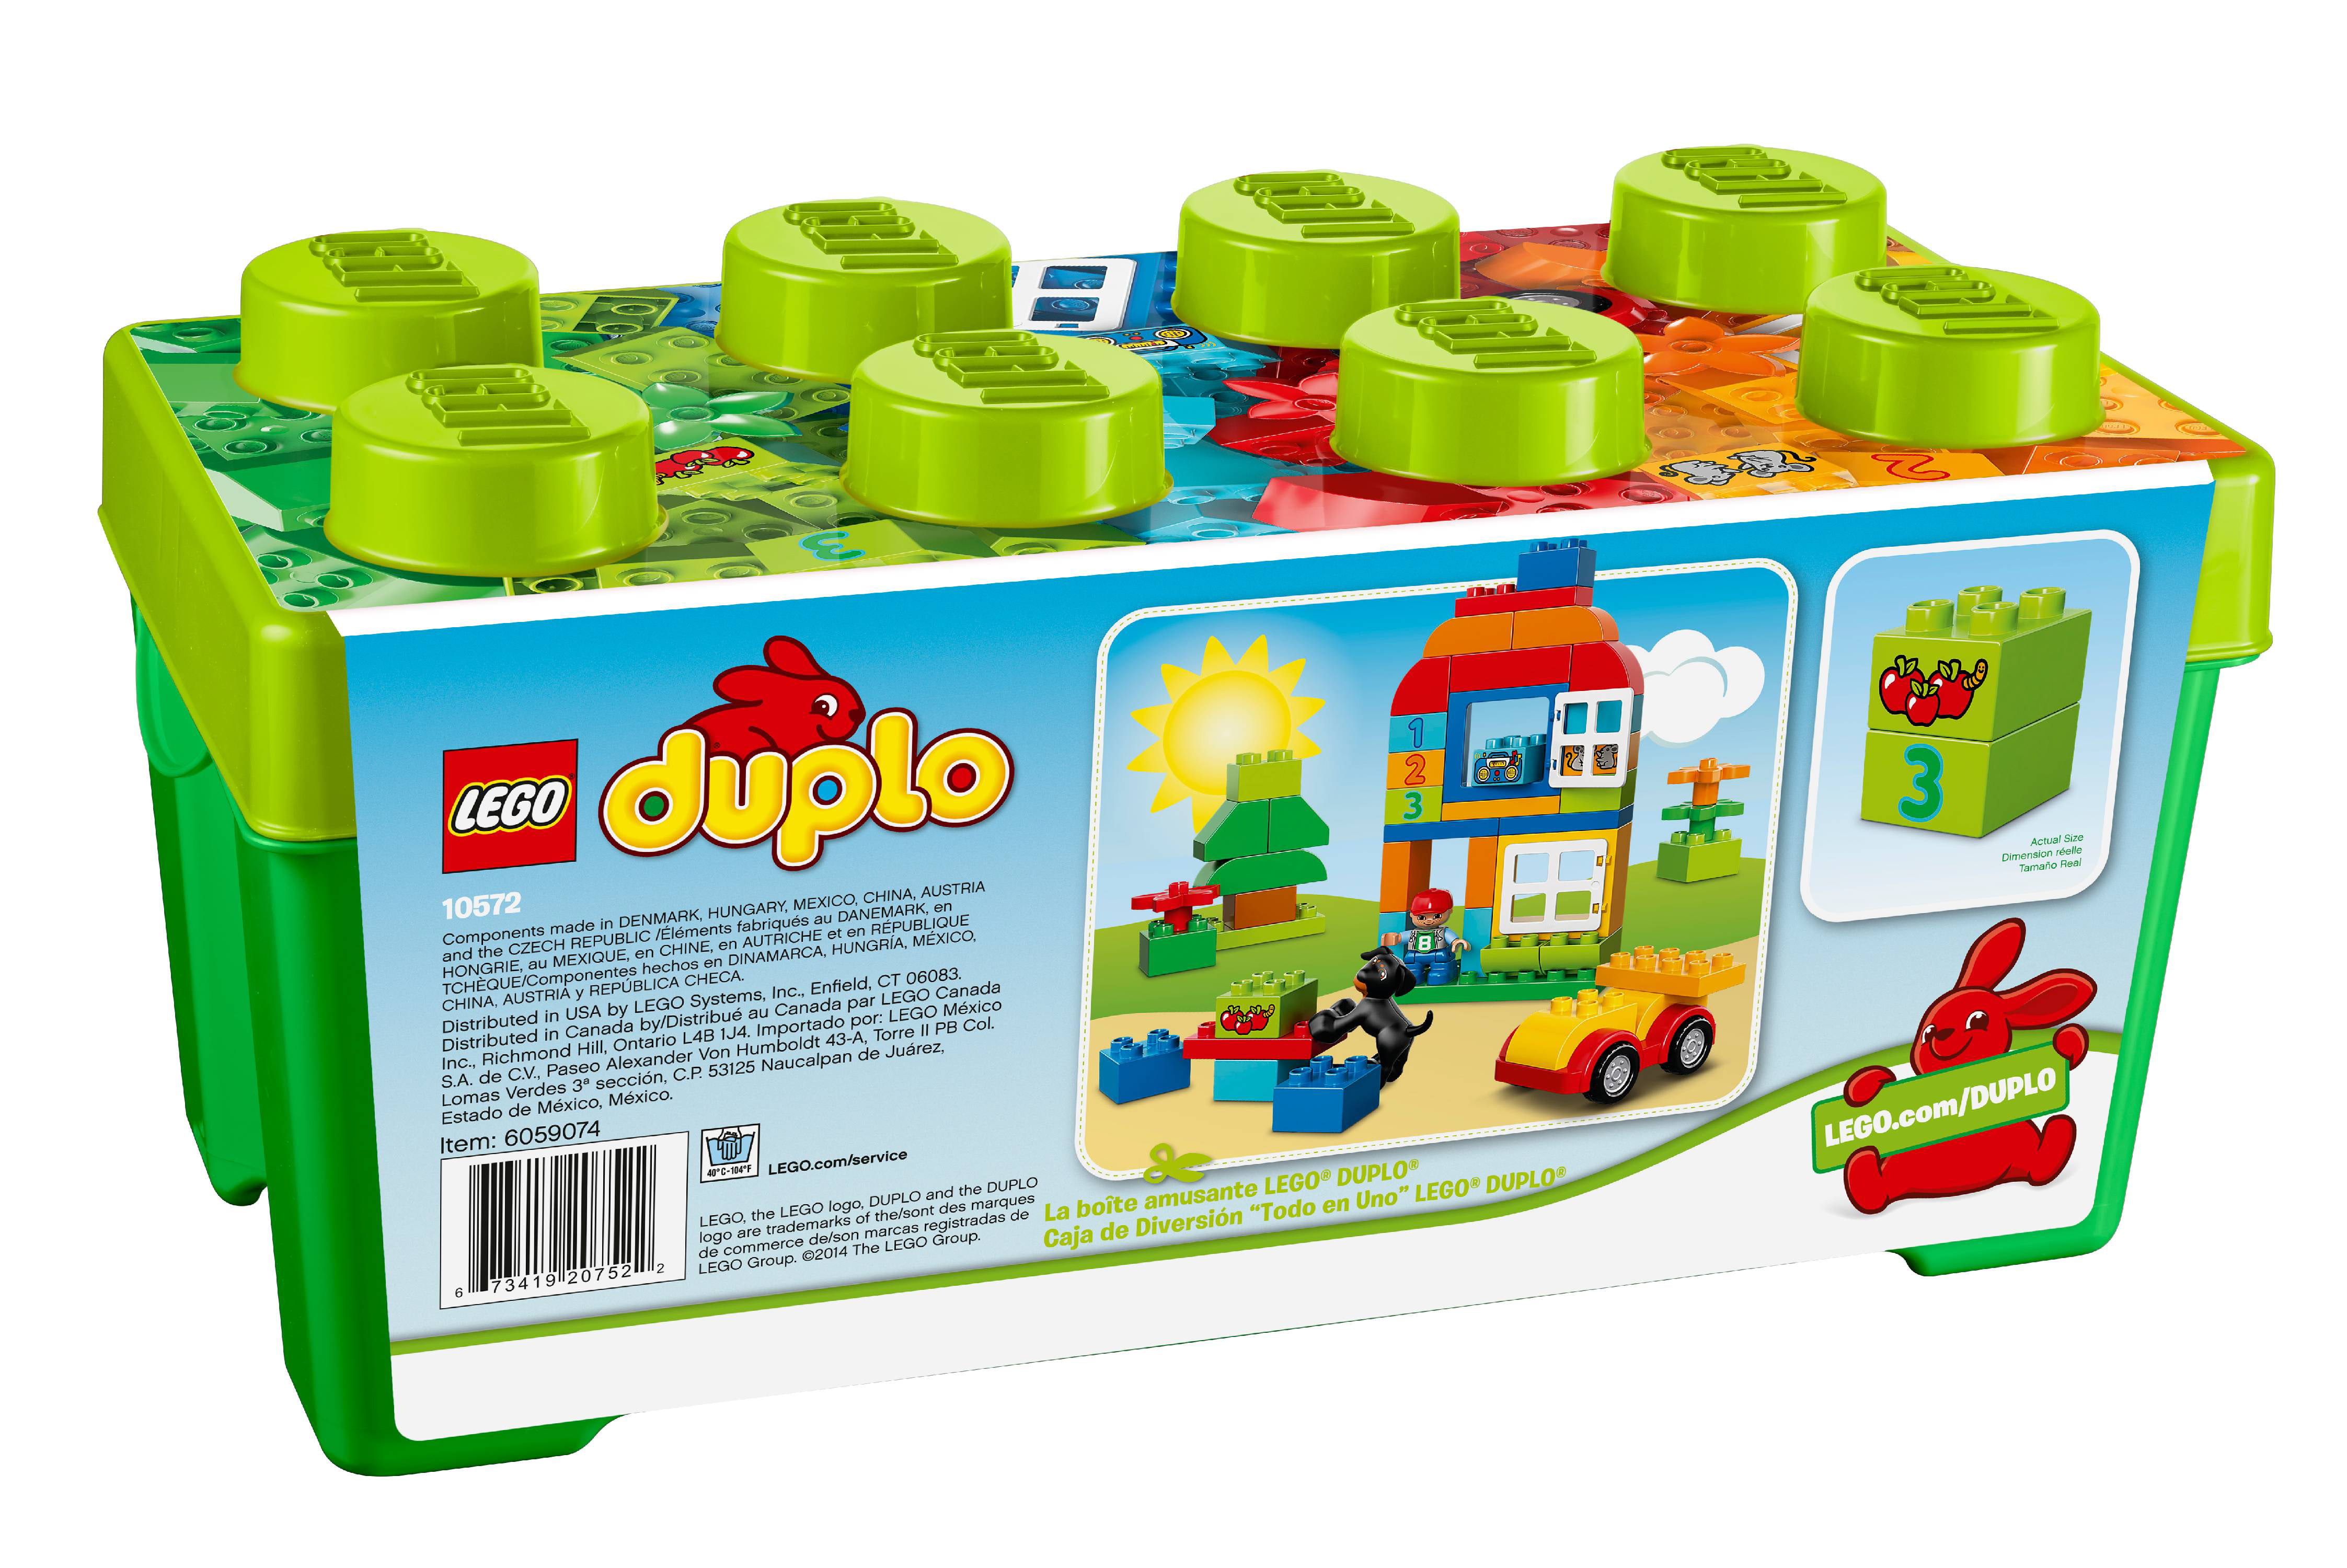 efterspørgsel Berettigelse Knogle LEGO DUPLO All-in-One-Box-of-Fun Brick Box 10572 (65 Pieces) - Walmart.com